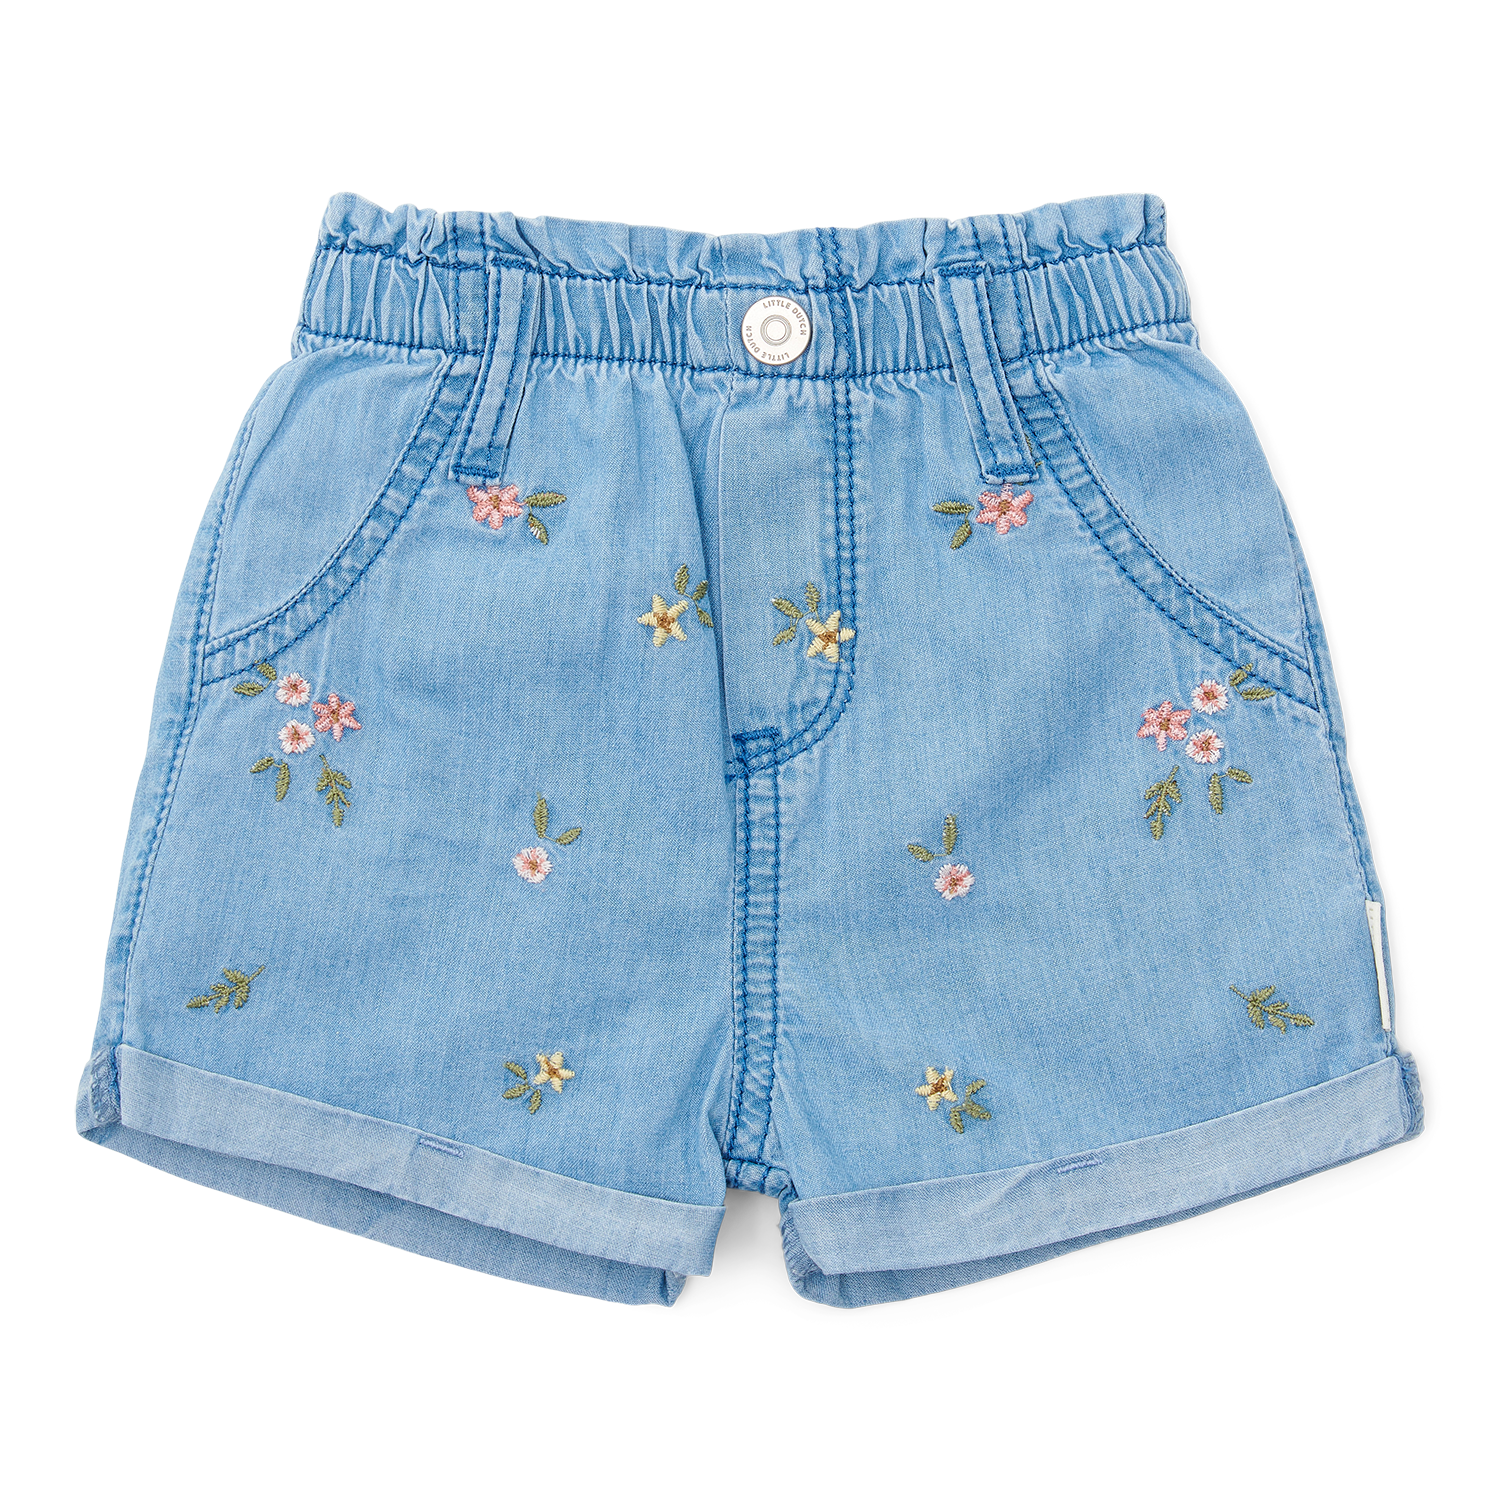 Kurze Hose / Shorts Denim Little Farm jeans (Gr. 80)